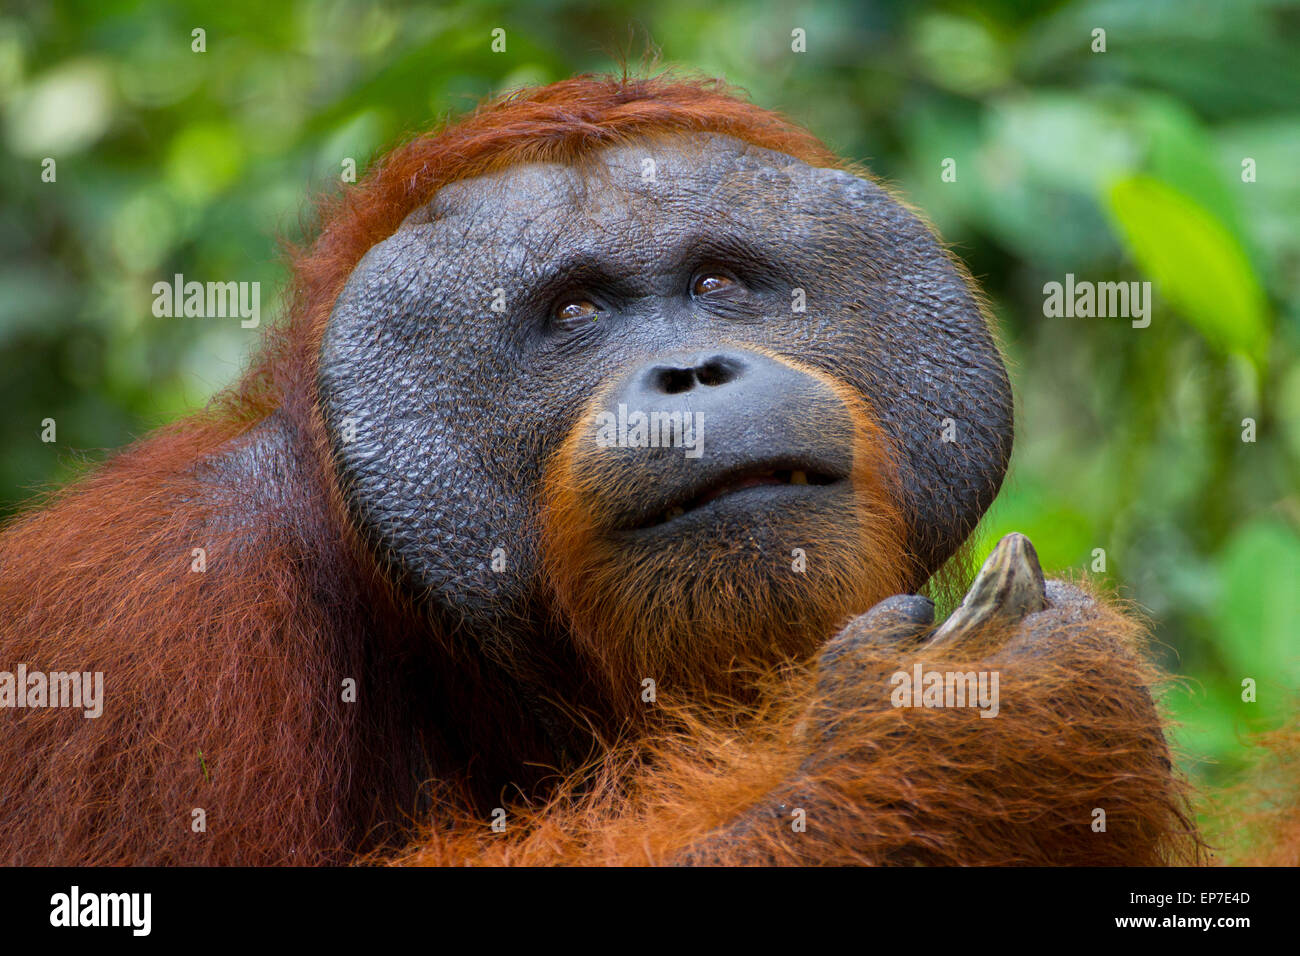 Large Orangutan with cheek pads Holding Banana Stock Photo